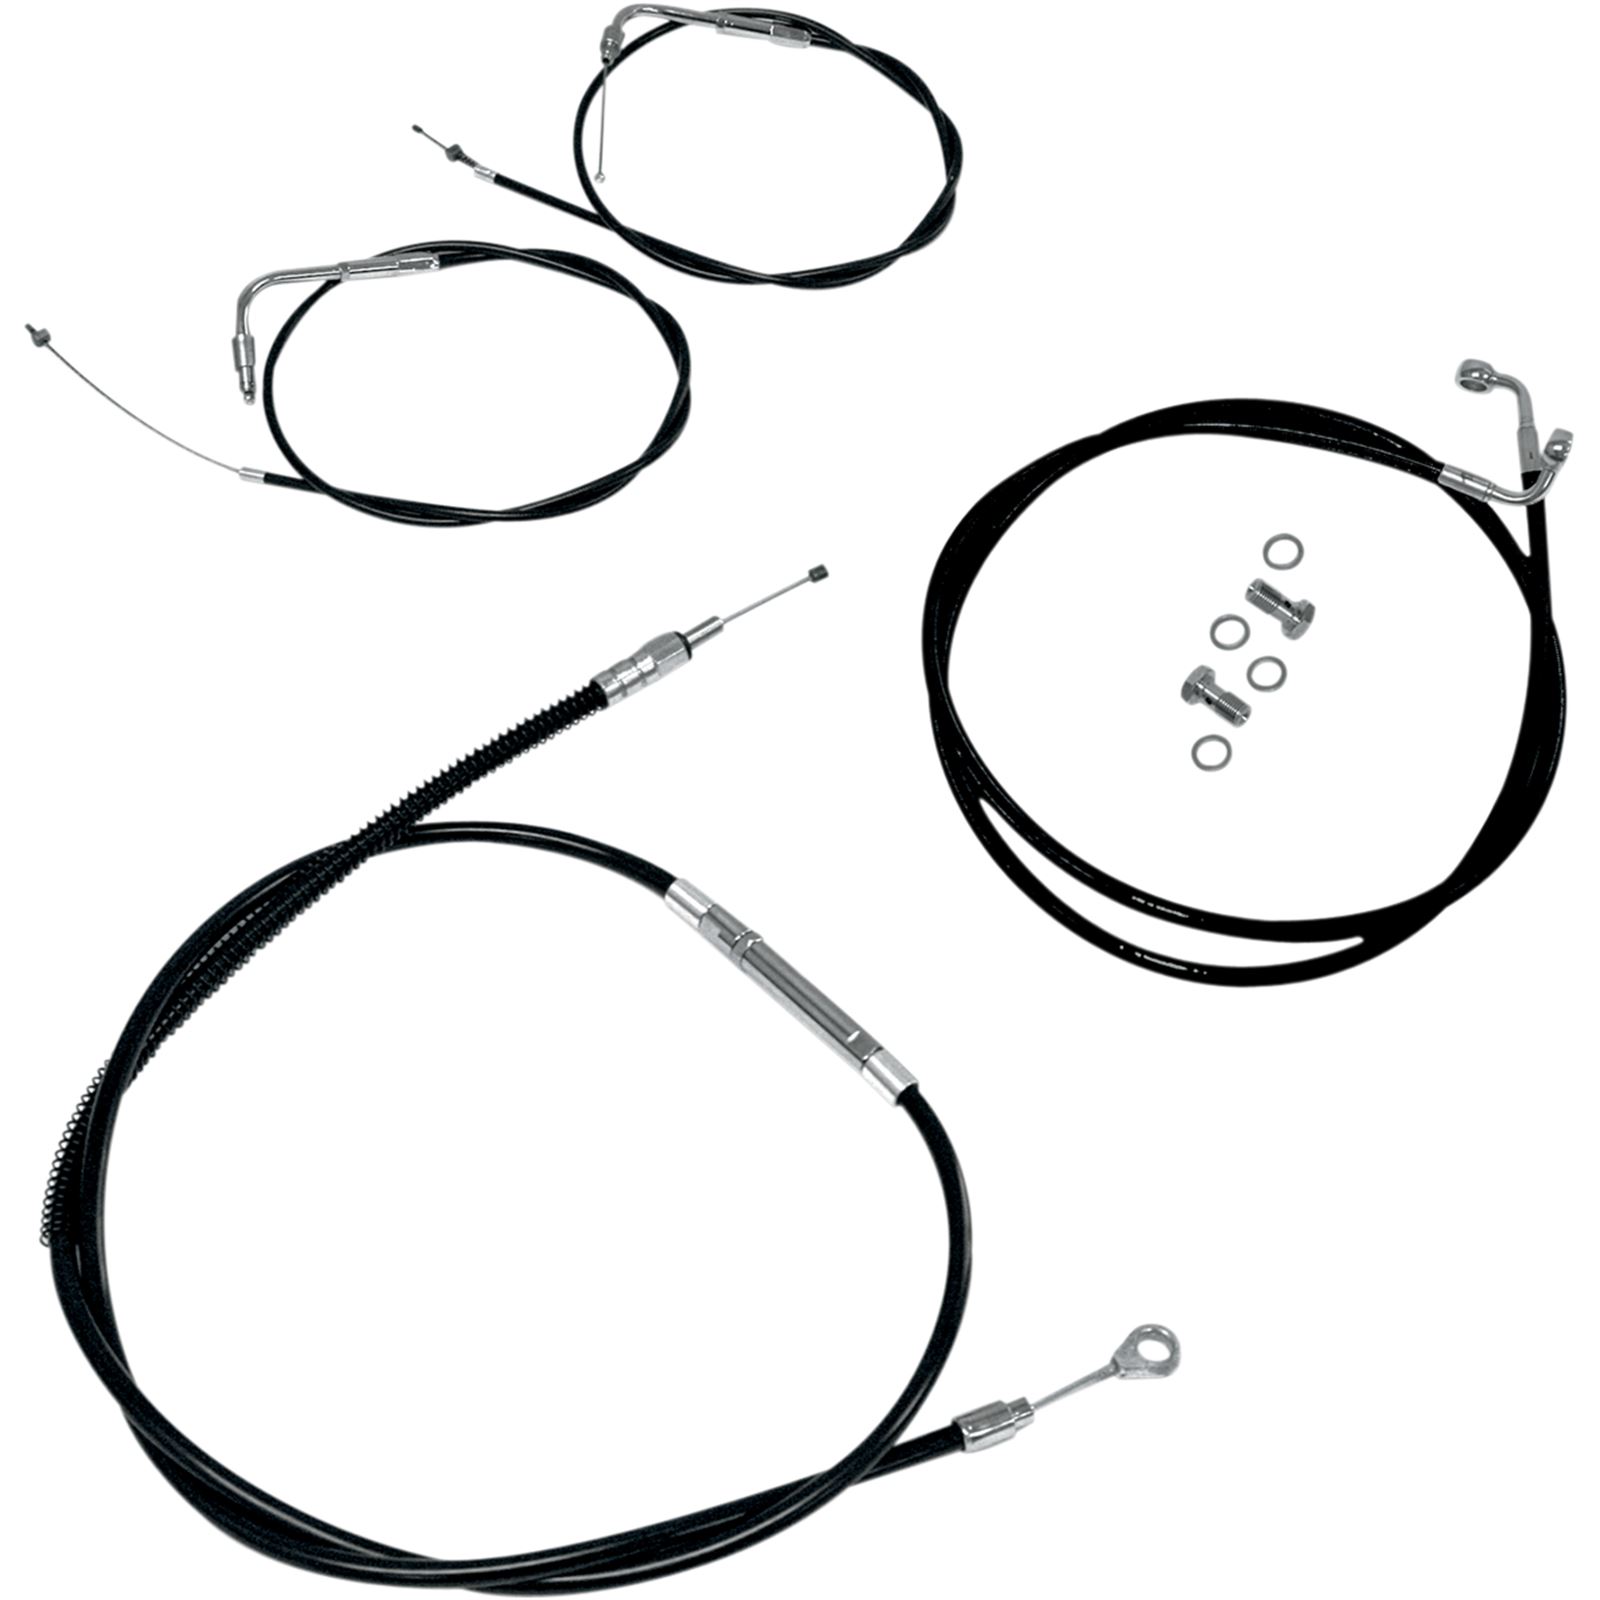 LA Choppers Standard Black Vinyl Braided Handlebar Cable/Brake Line Kit For Beach Bar Handlebars